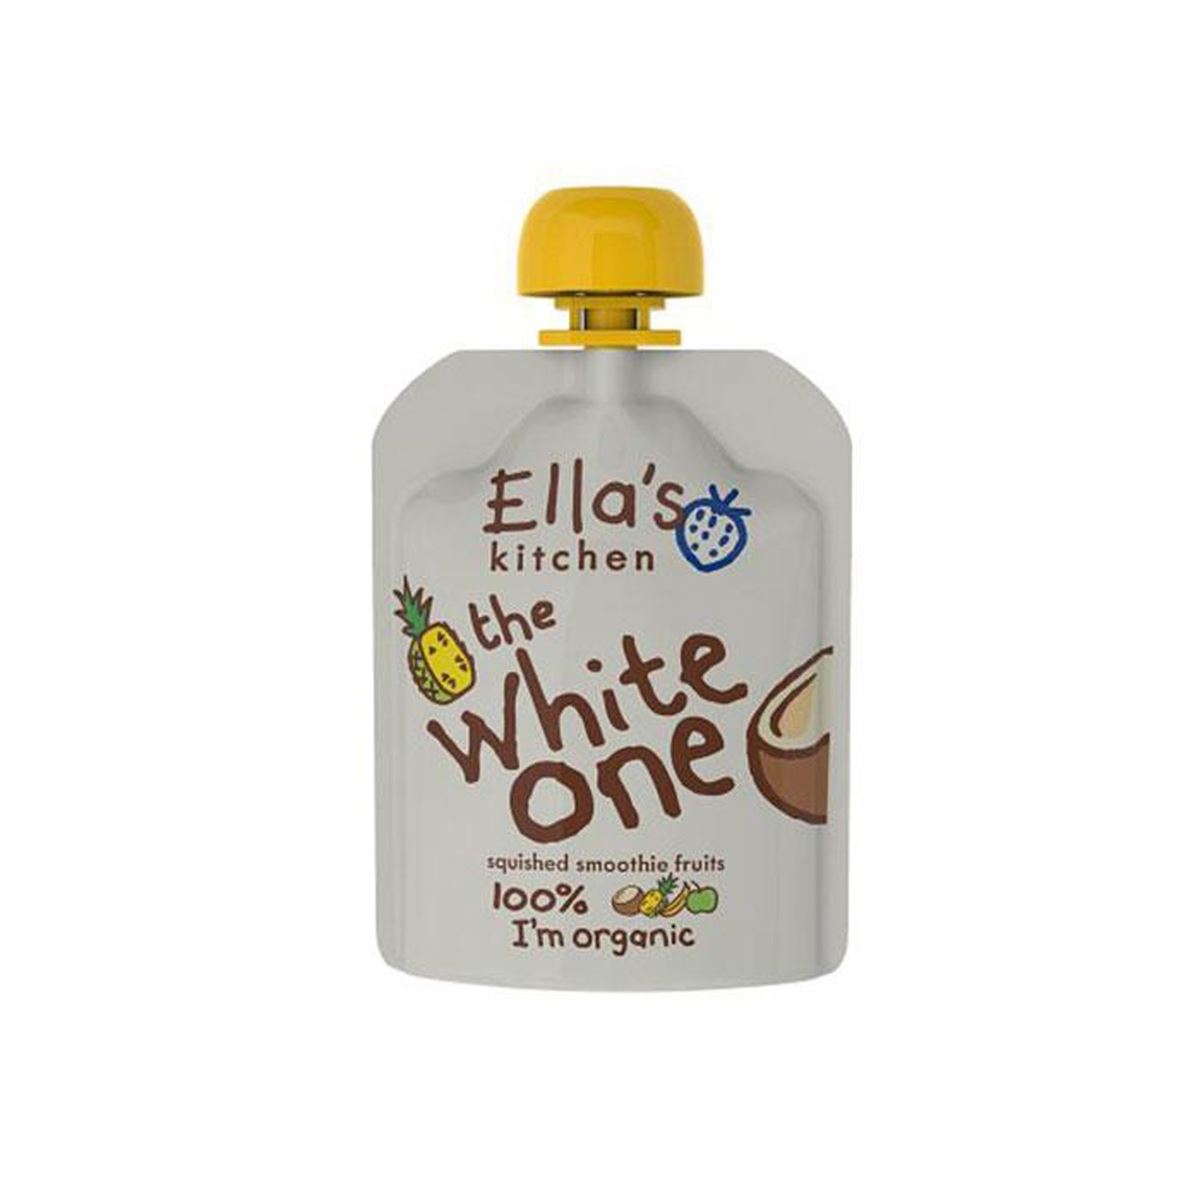 Ellas Kitchen The White One - 90g